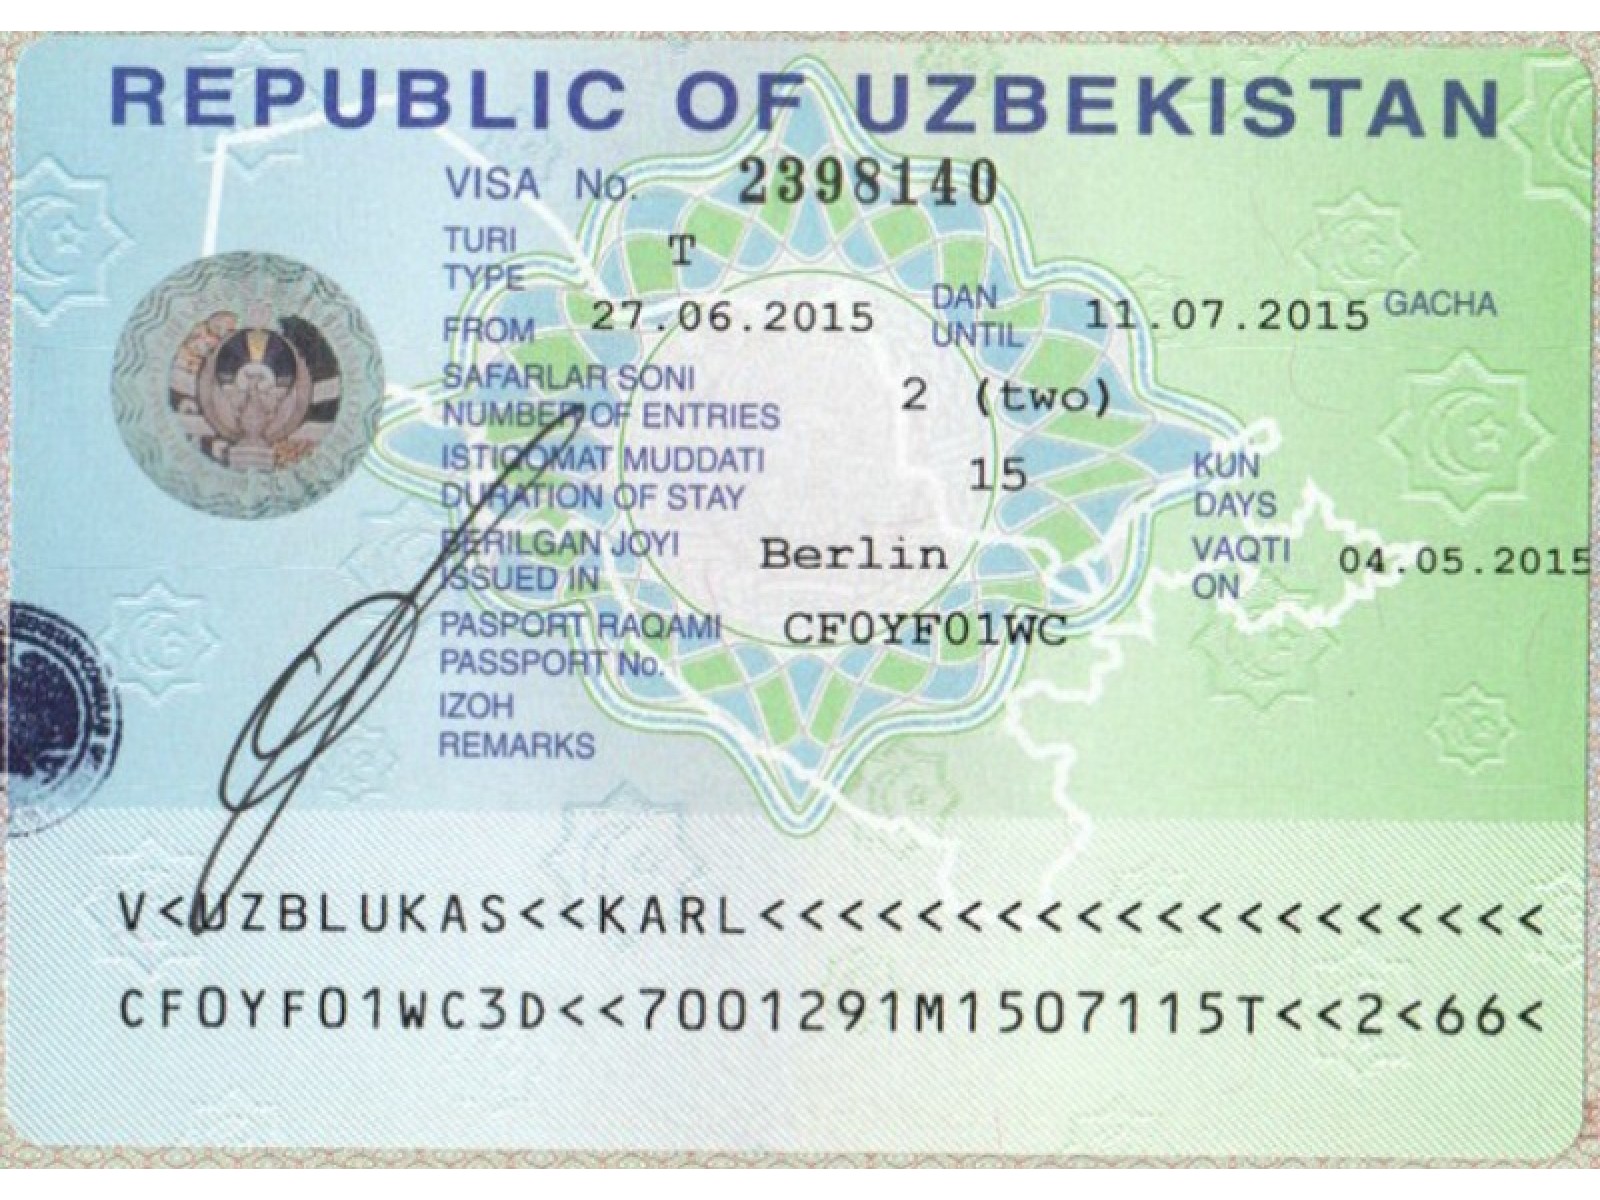 Uzbekistan visa information Uzbekistan Tour Operators and Travel Agency